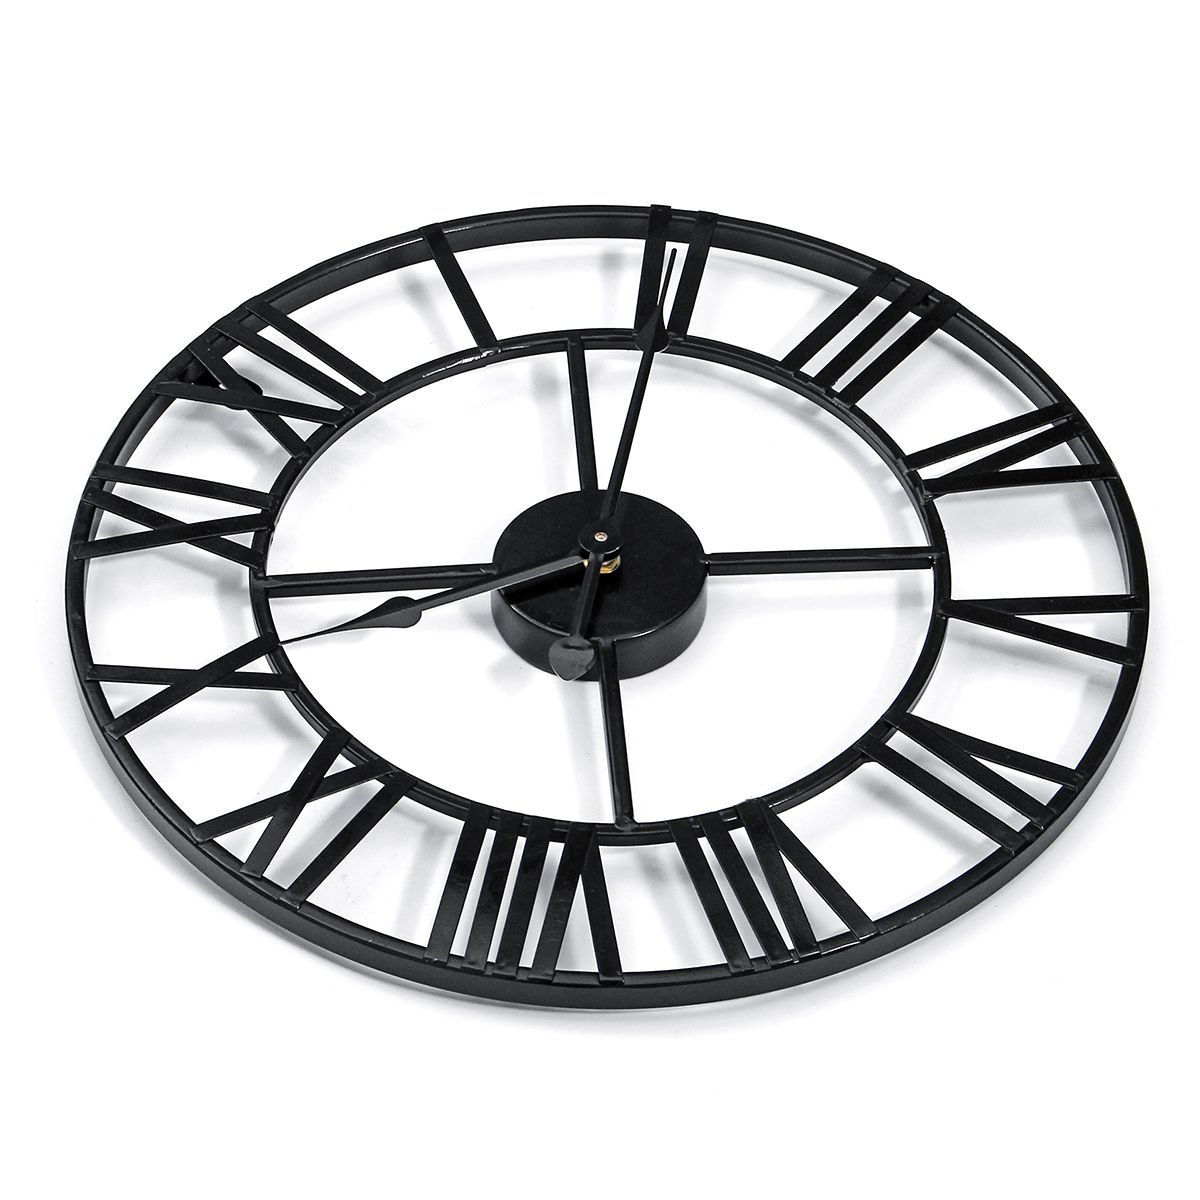 4060cm-Large-Metal-Skeleton-Roman-Numeral-Wall-Clock-Black-Round-Shape-1426215